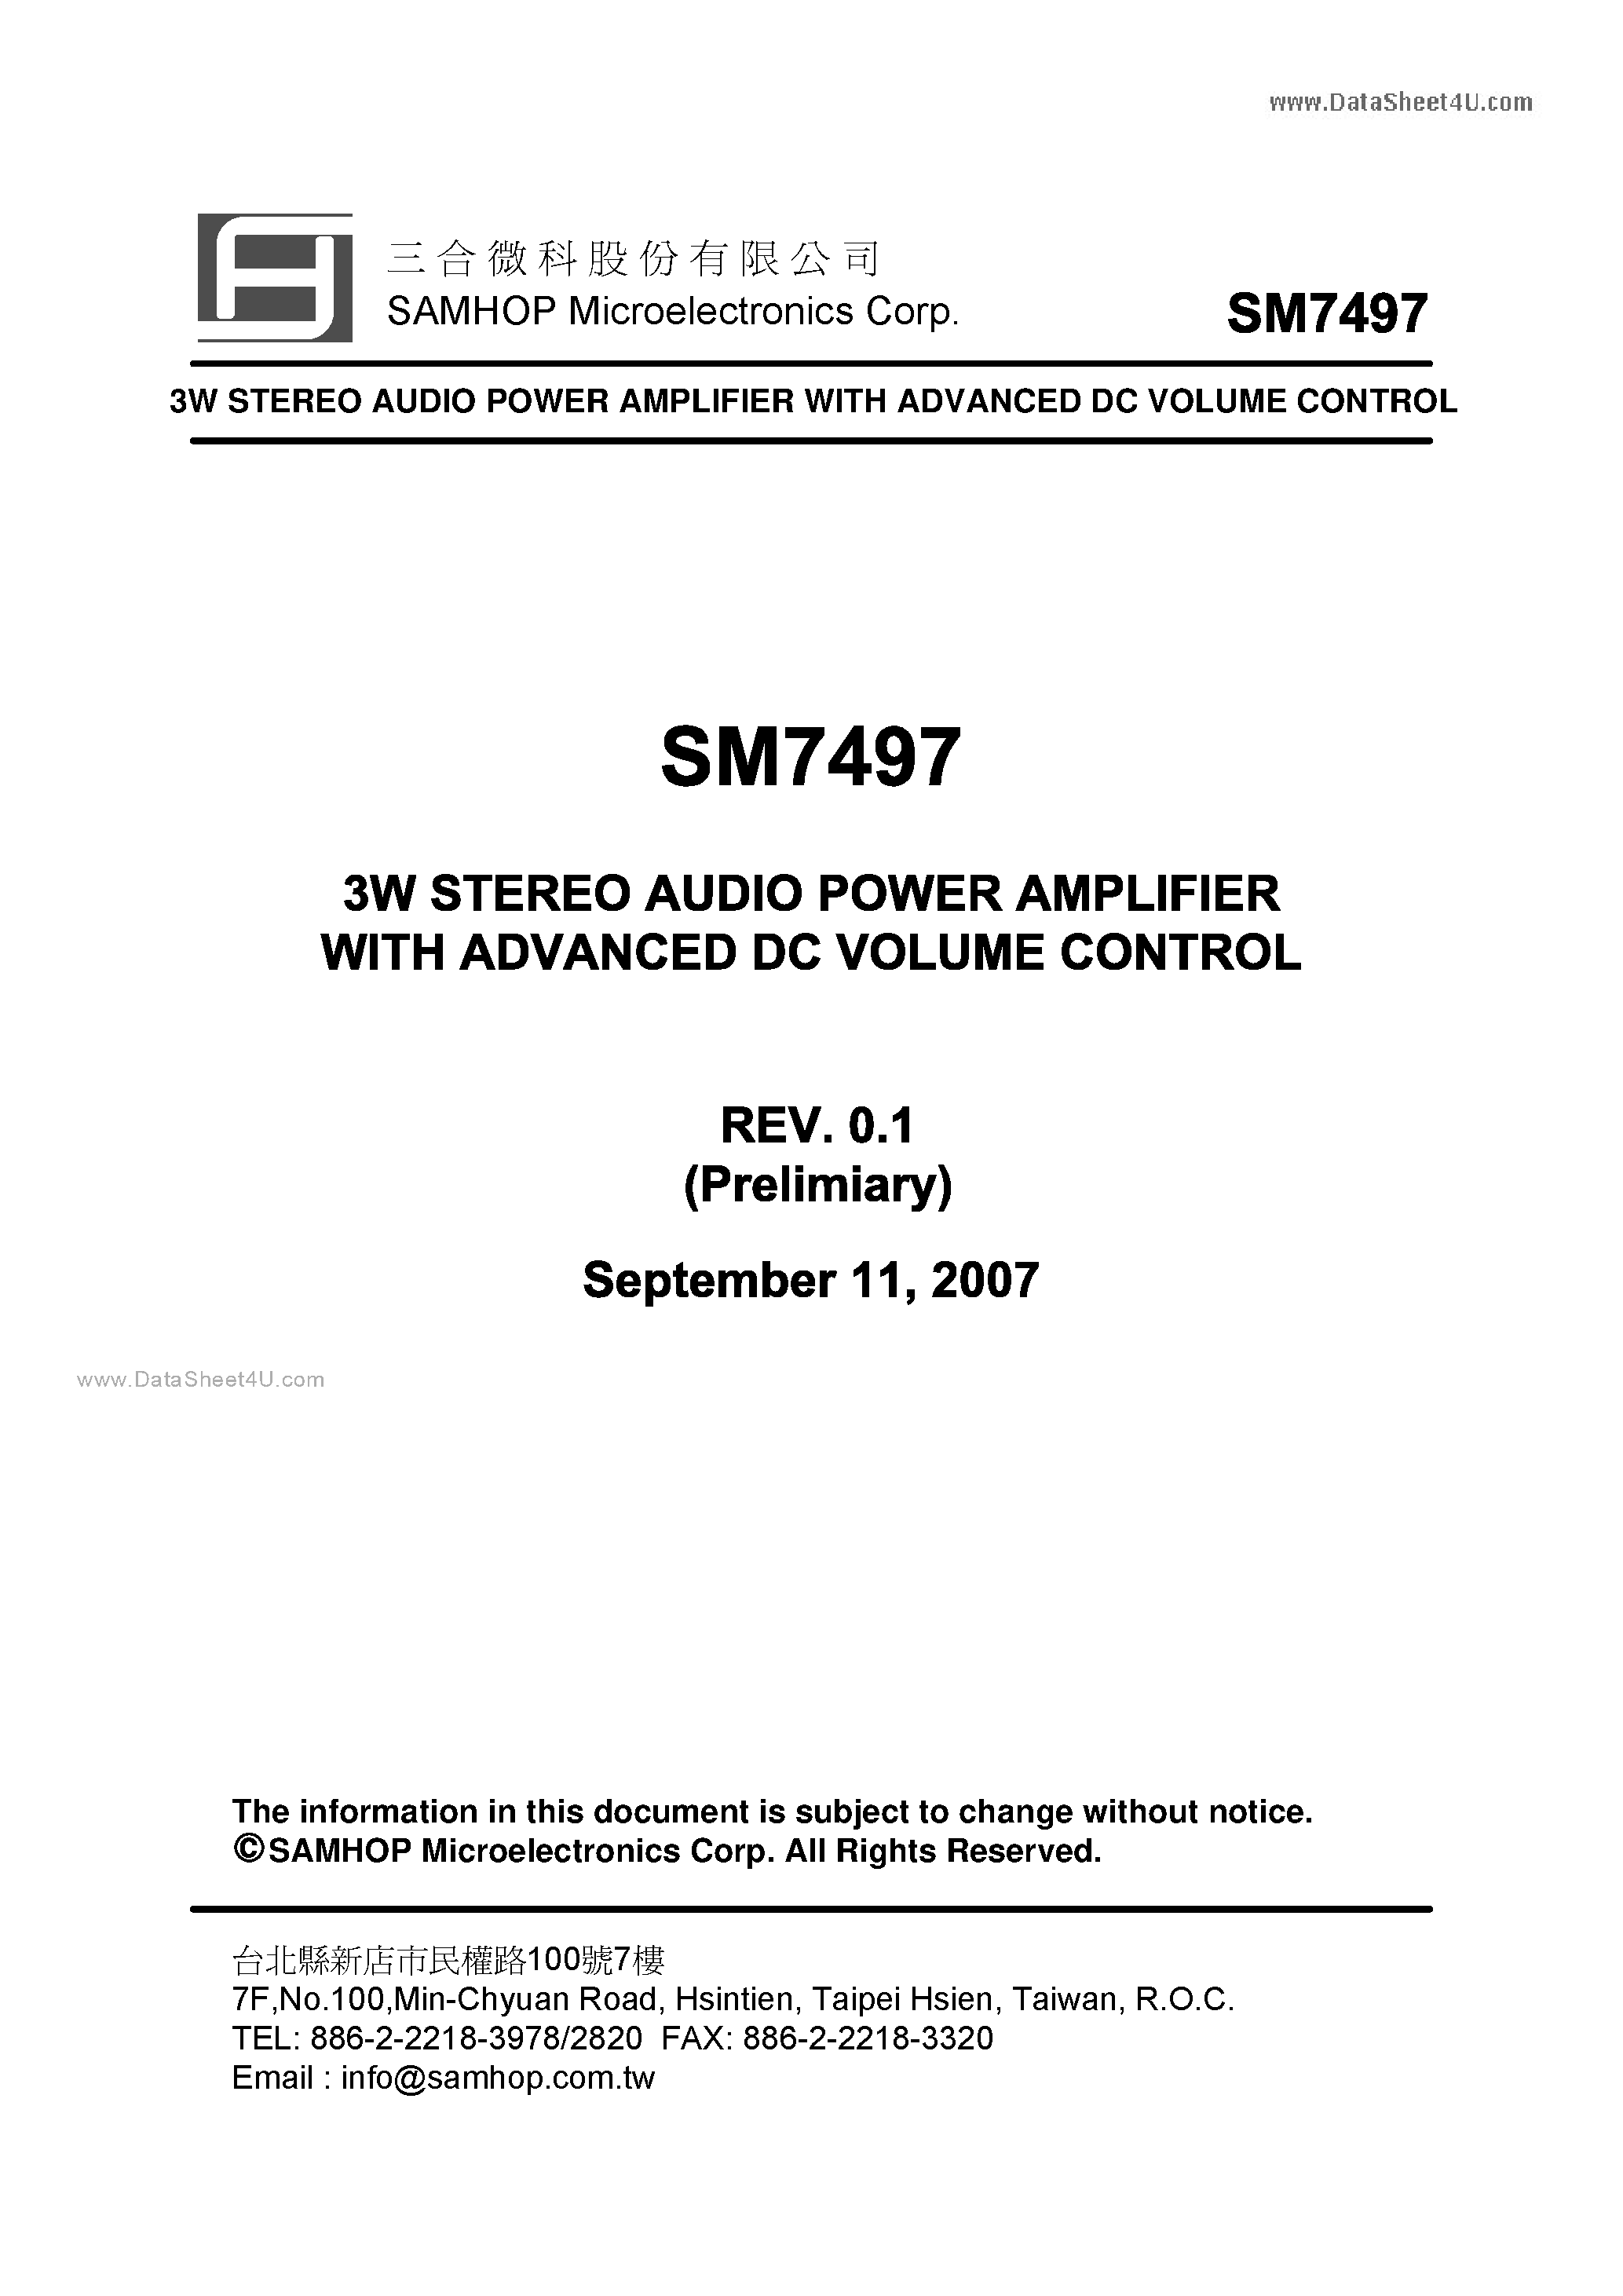 Даташит SM7497 - 3W STEREO AUDIO POWER AMPLIFIER страница 1